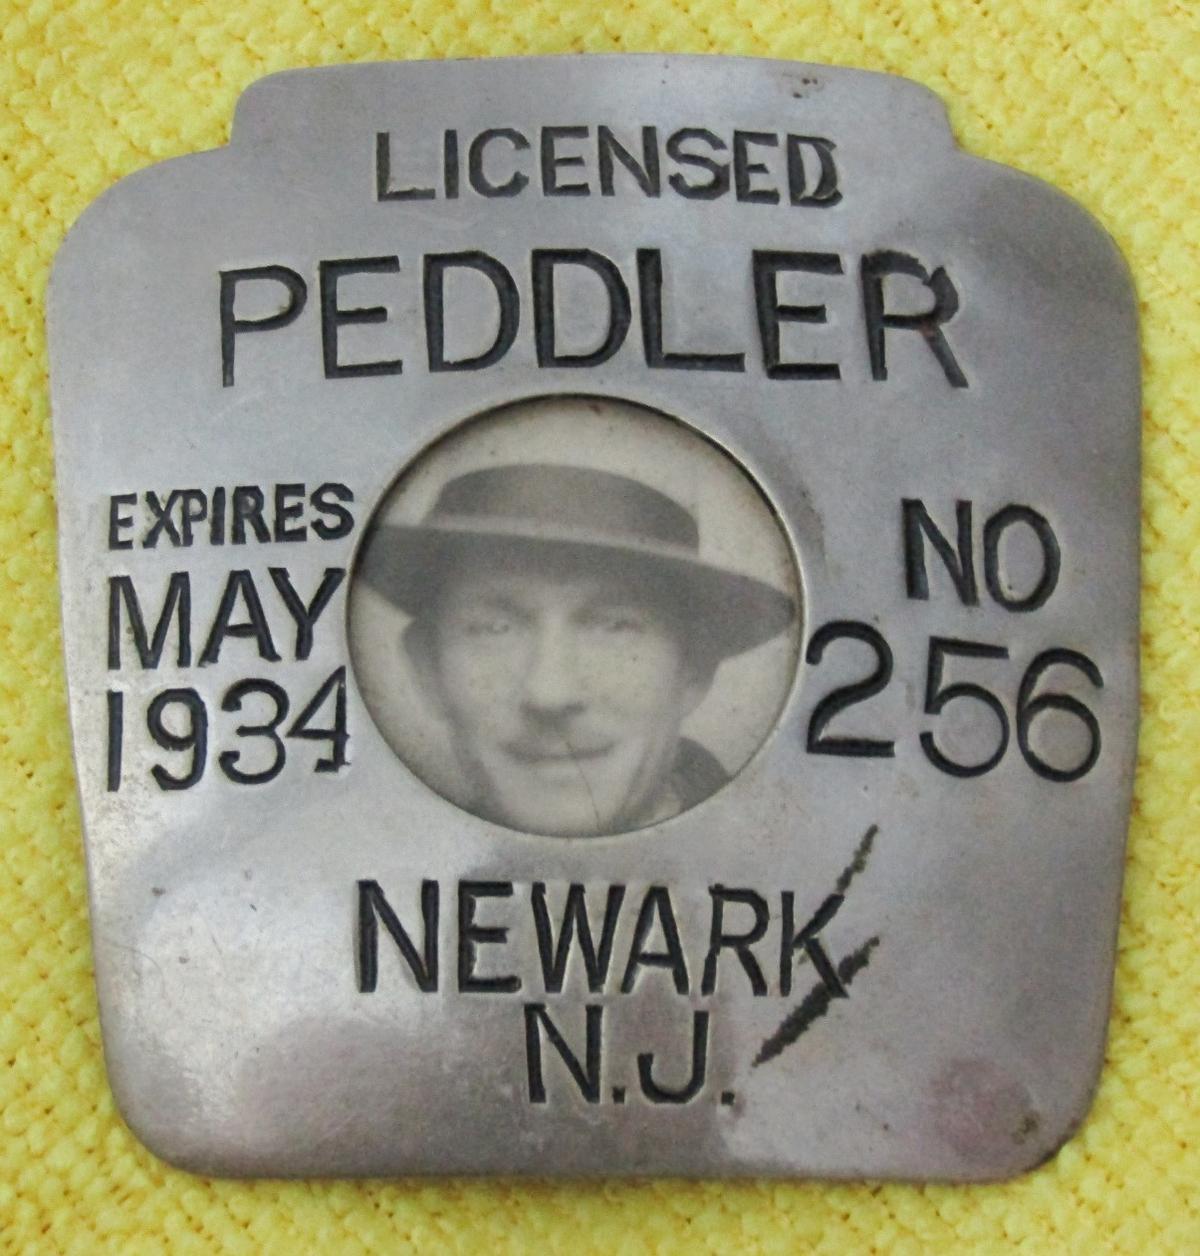 Extremely Rare "NEWARK, N.J. LICENSED PEDDLER" Badge-No. 256-Expires May 1934